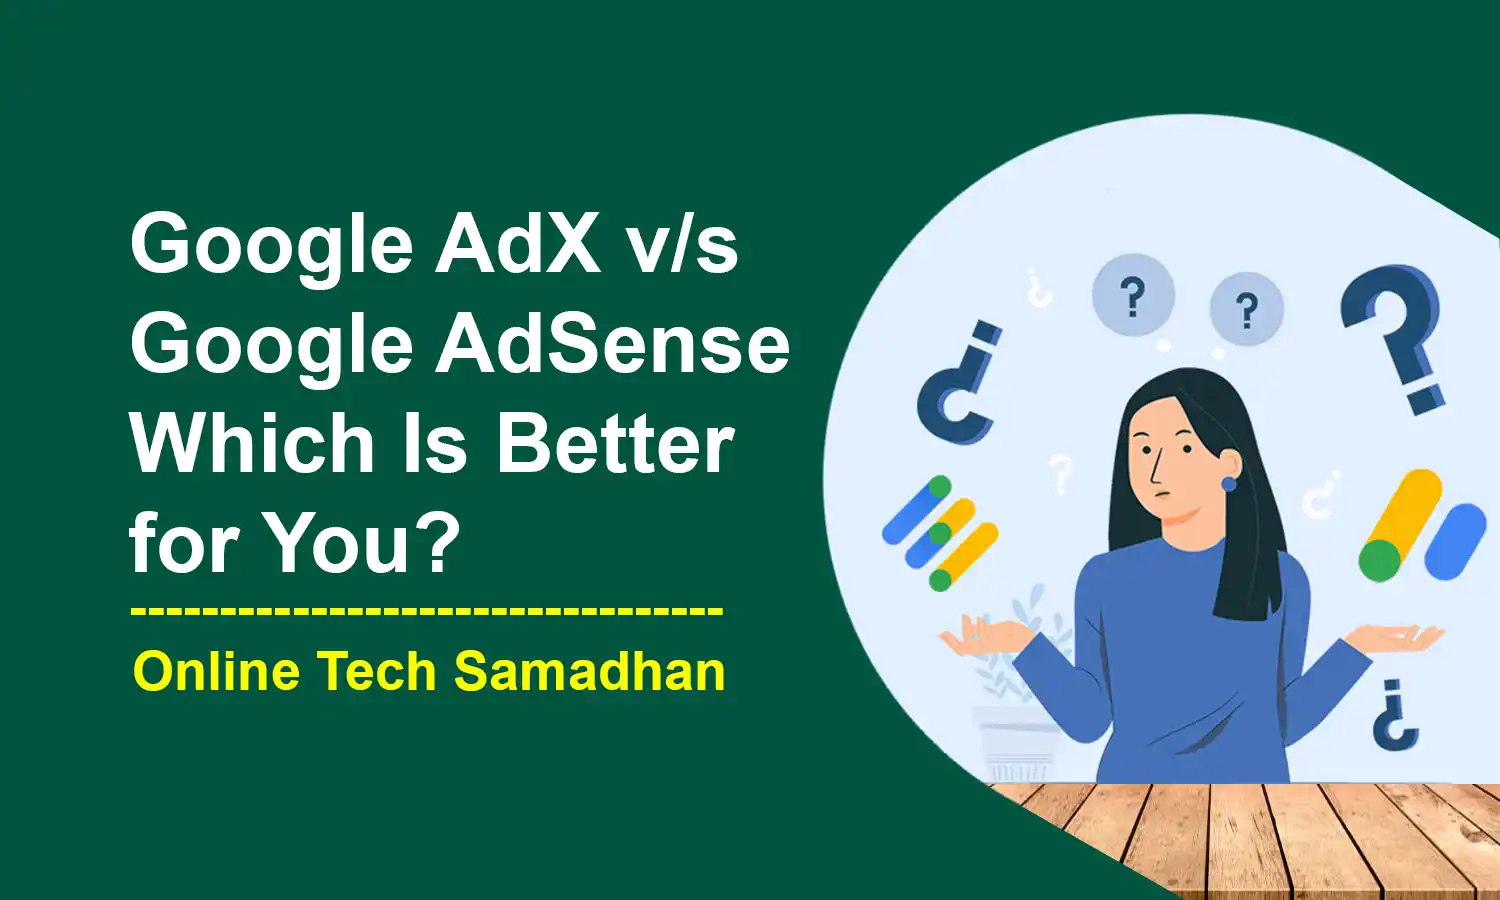 Google AdX vs Google AdSense